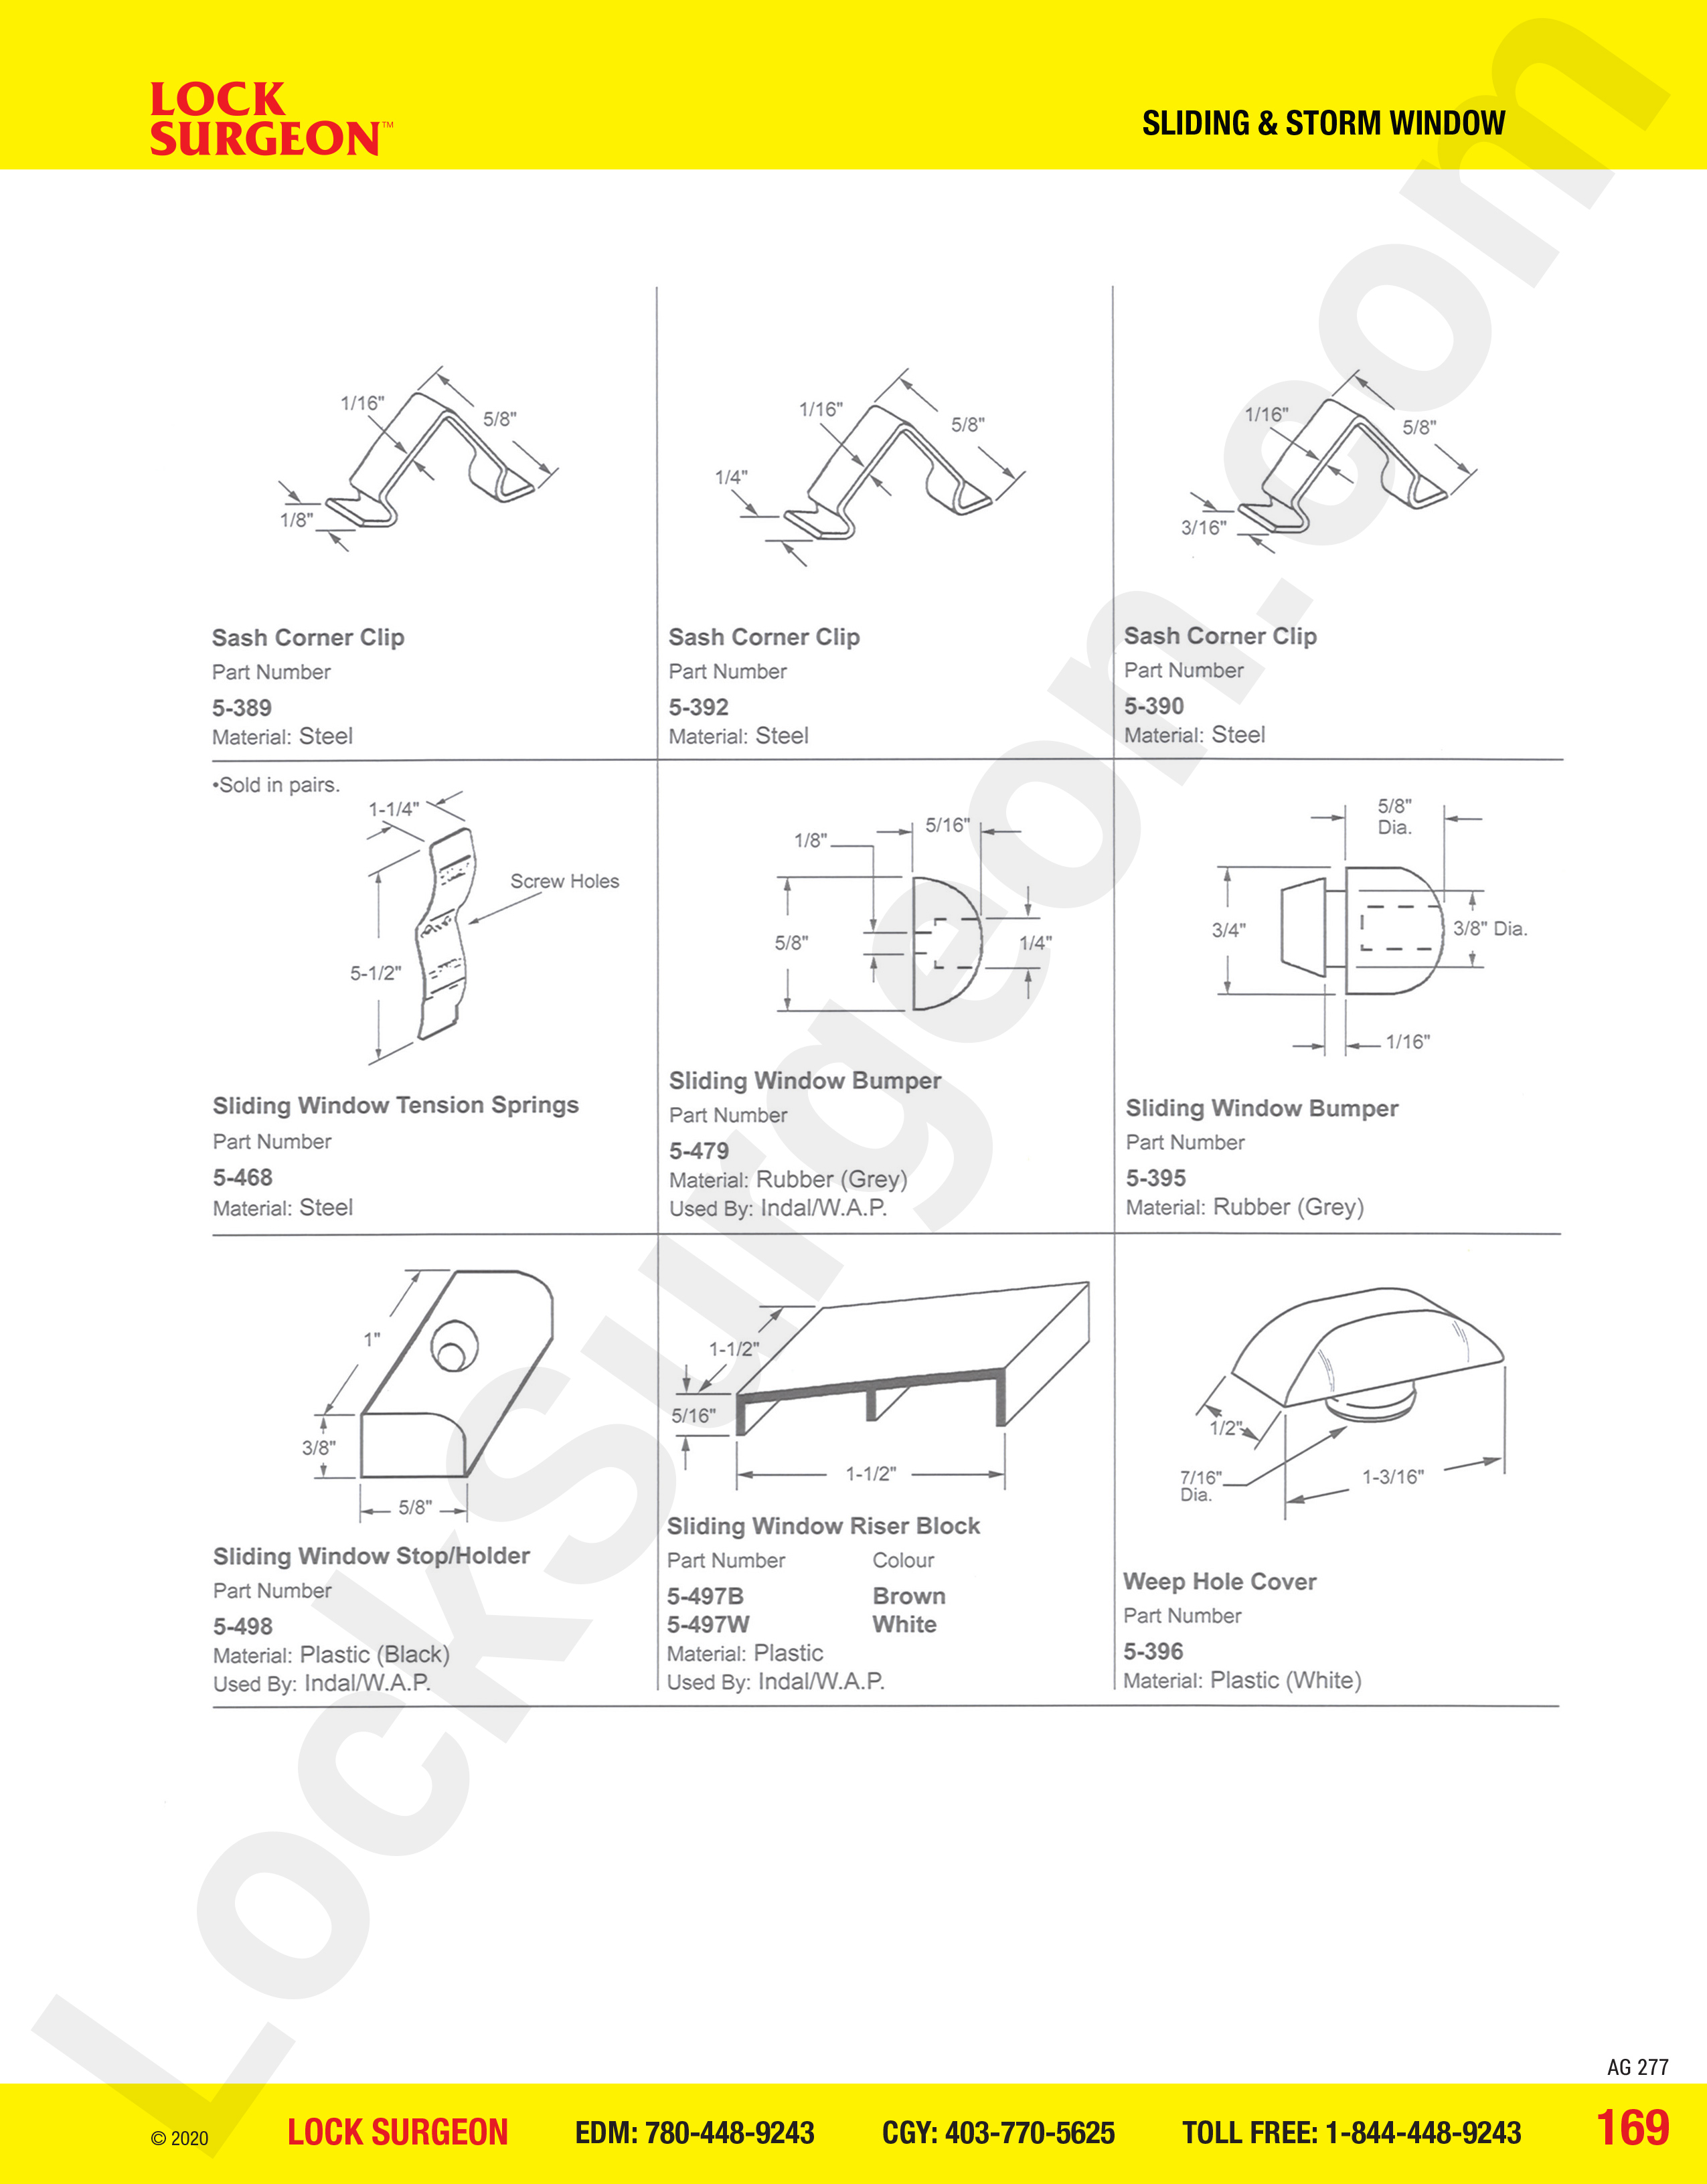 Sash corner clips 5/8 - steel, sliding window tension springs, Indal/W.A.P. sliding window bumper